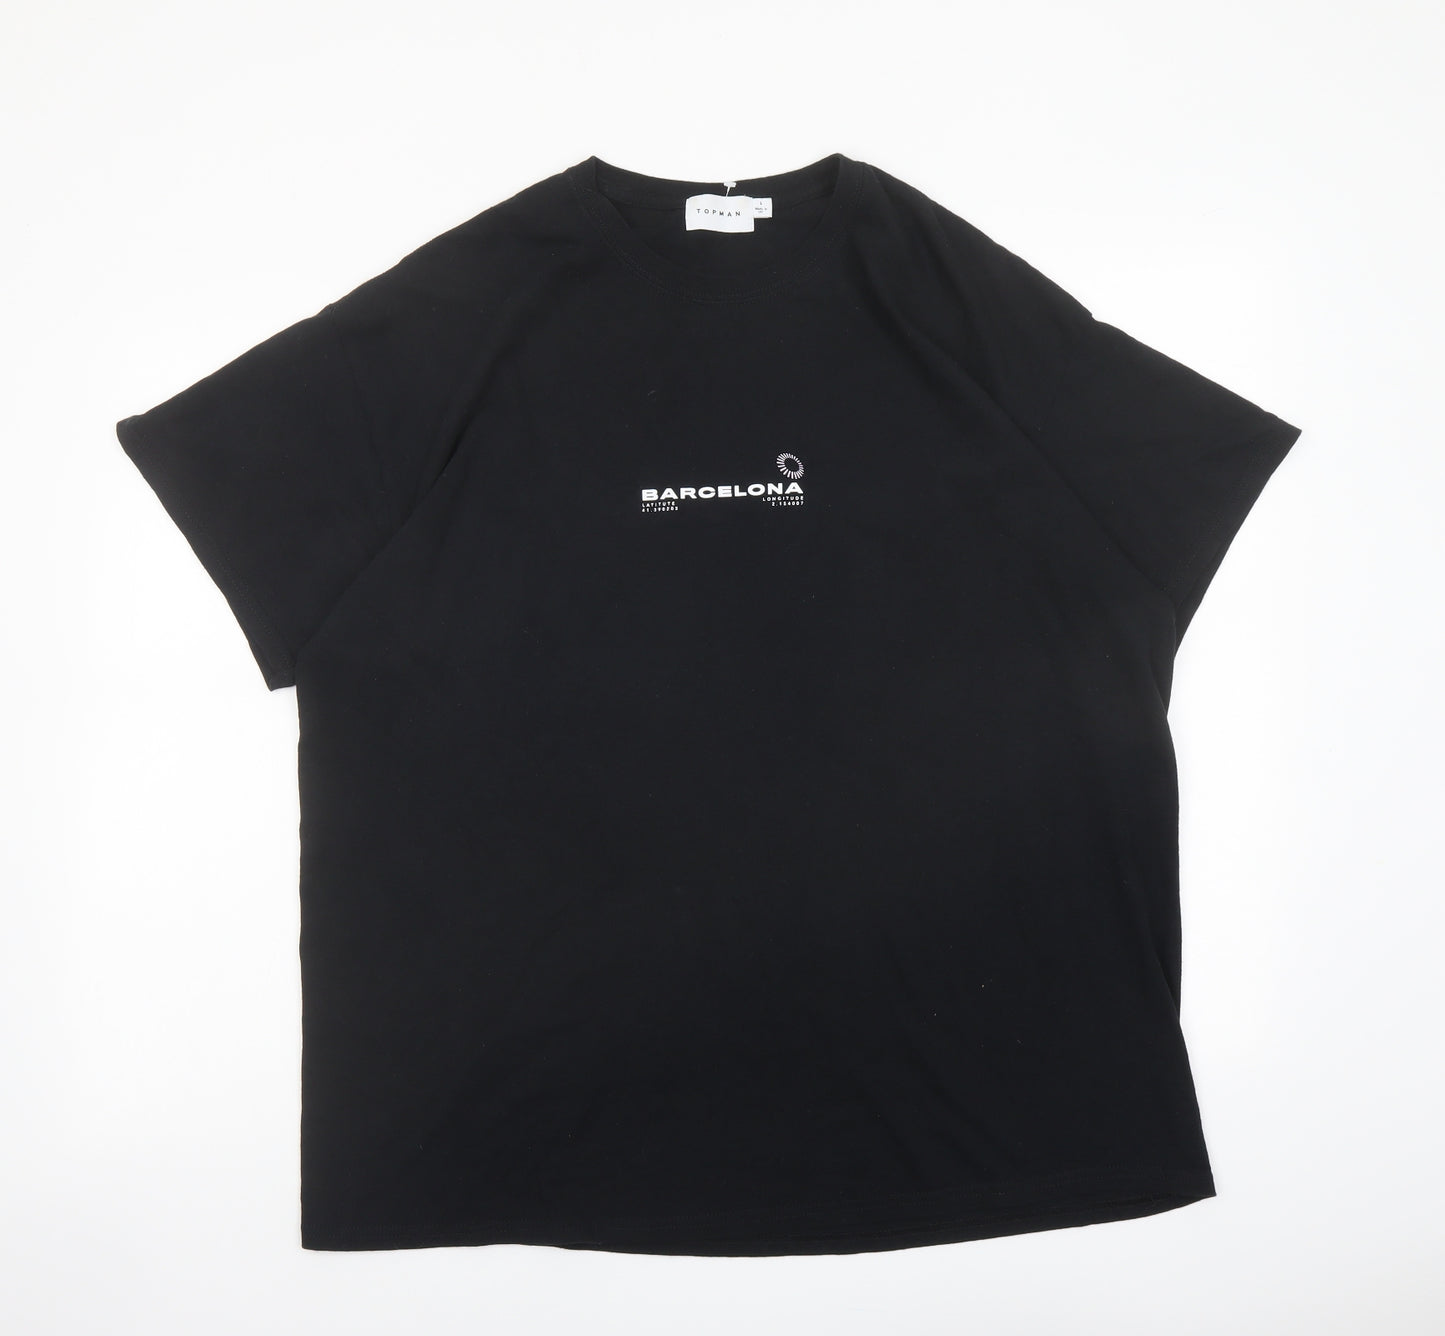 Topman Mens Black Cotton T-Shirt Size L Crew Neck - Barcelona